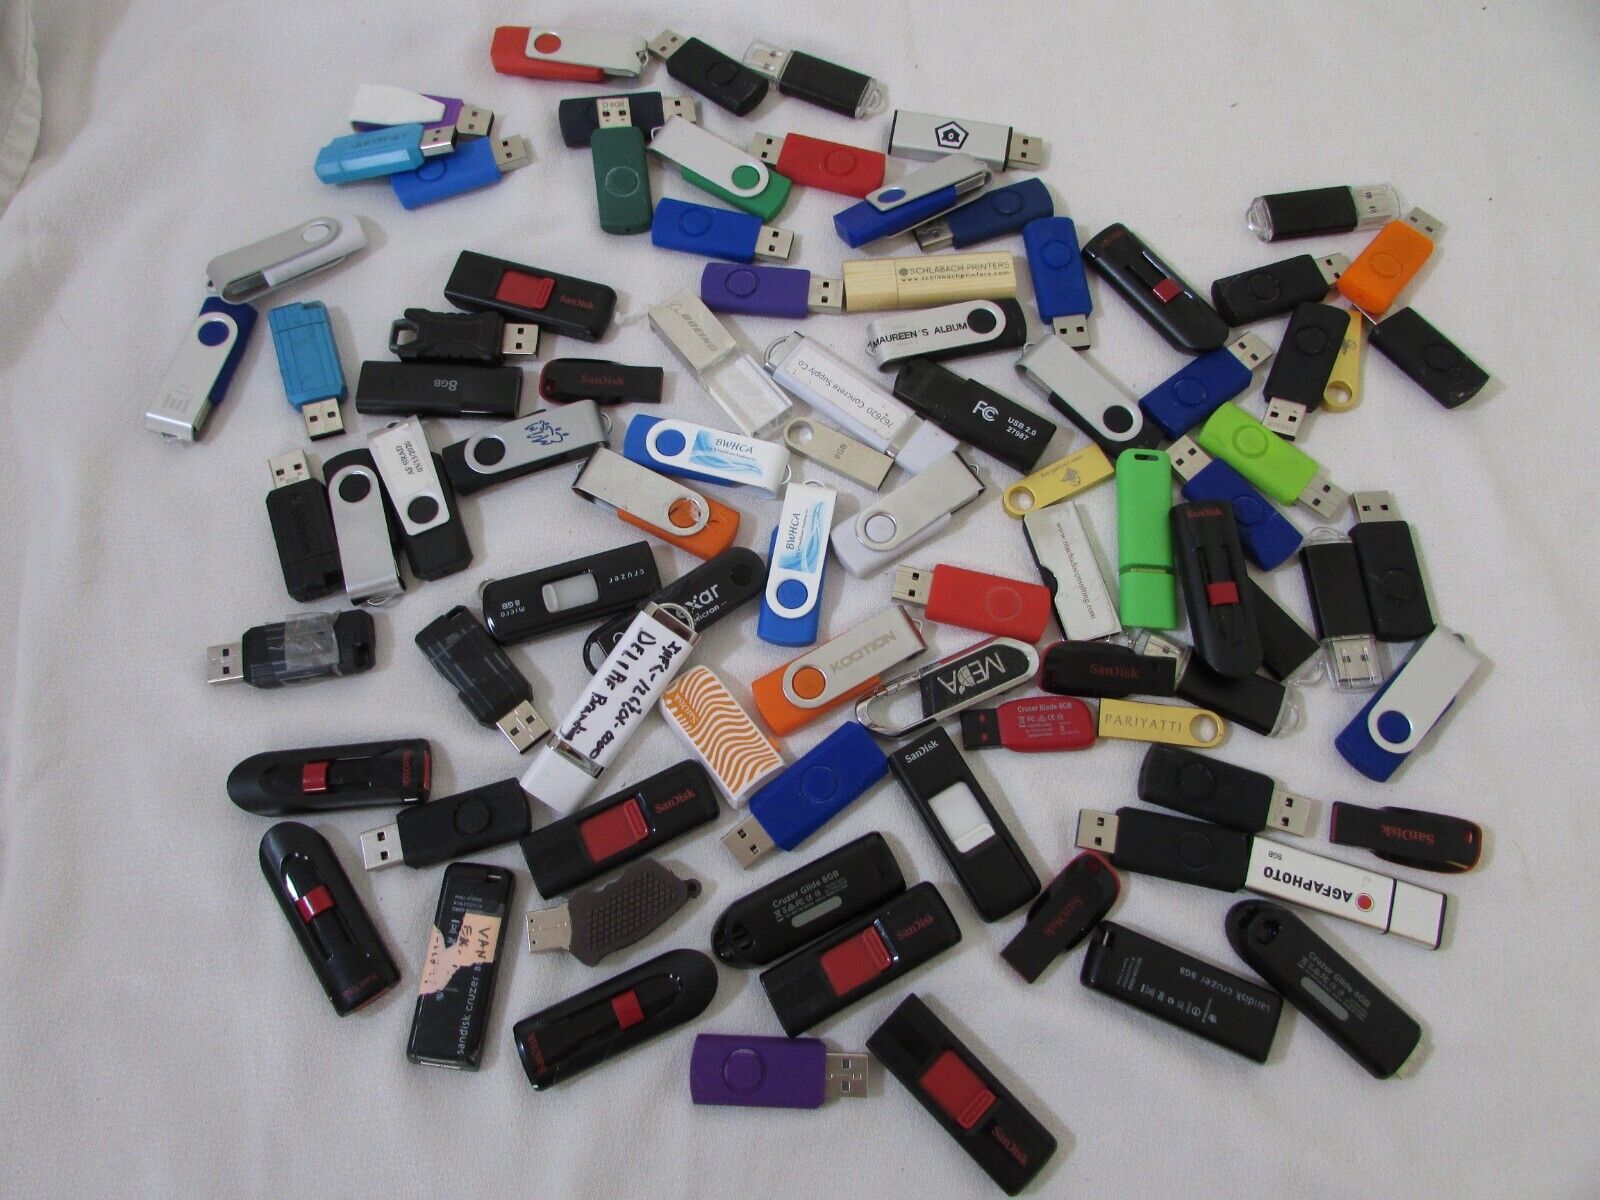 8GB USB Flash Drive Memory Sticks verbatim sandisk unbranded etc.. - lot of 89